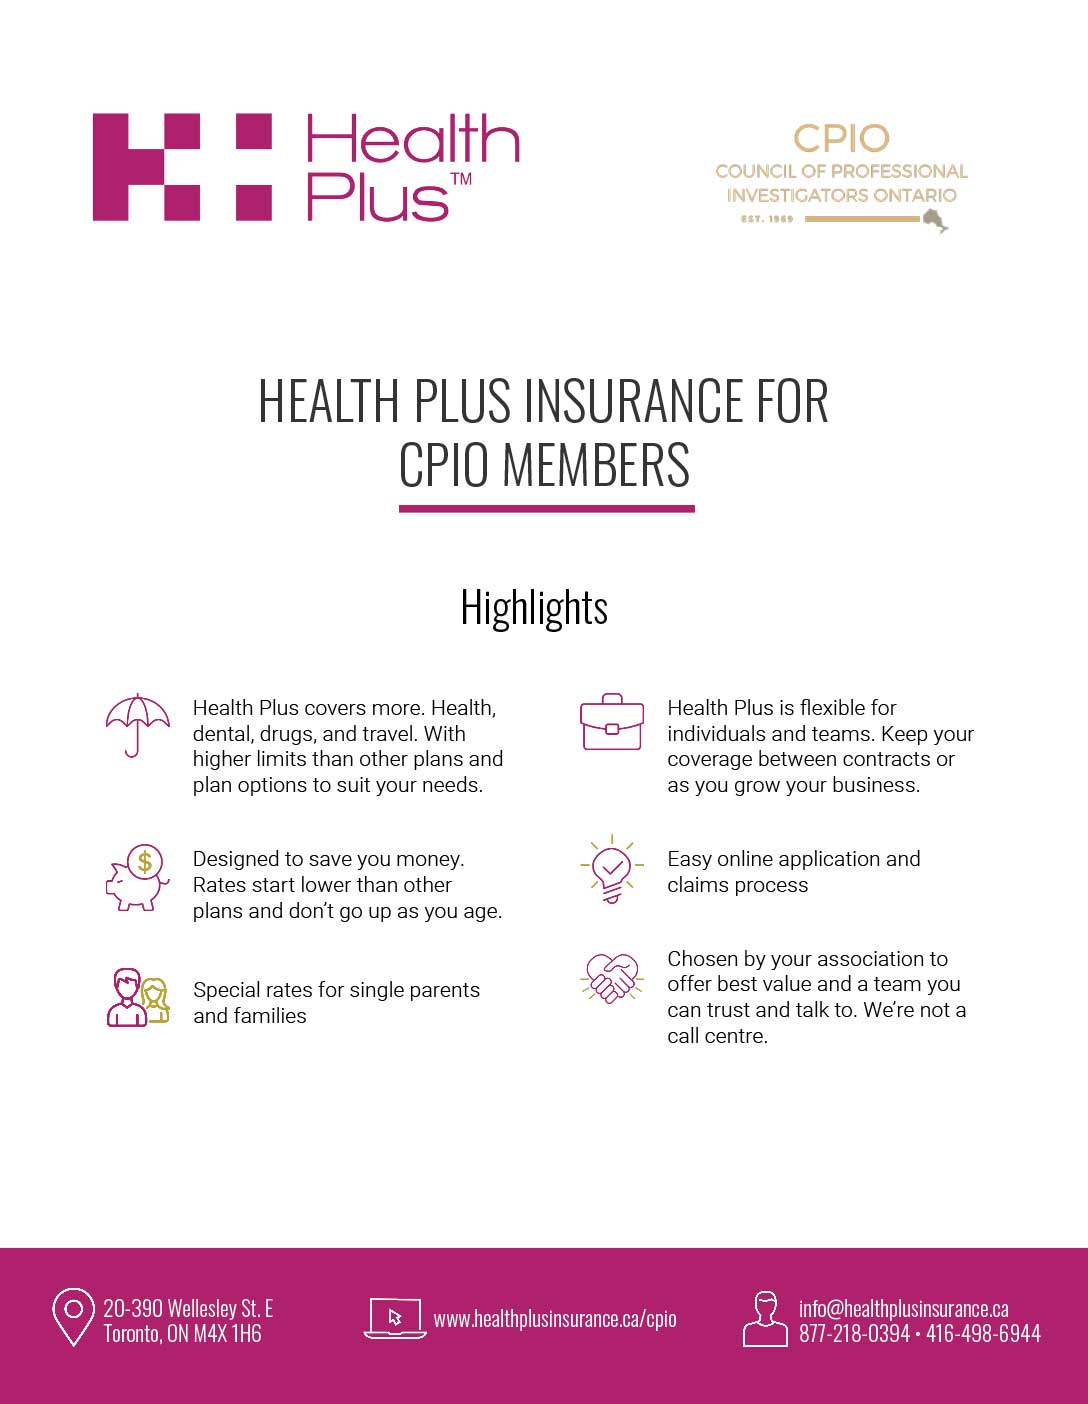 CPIO health insurance information